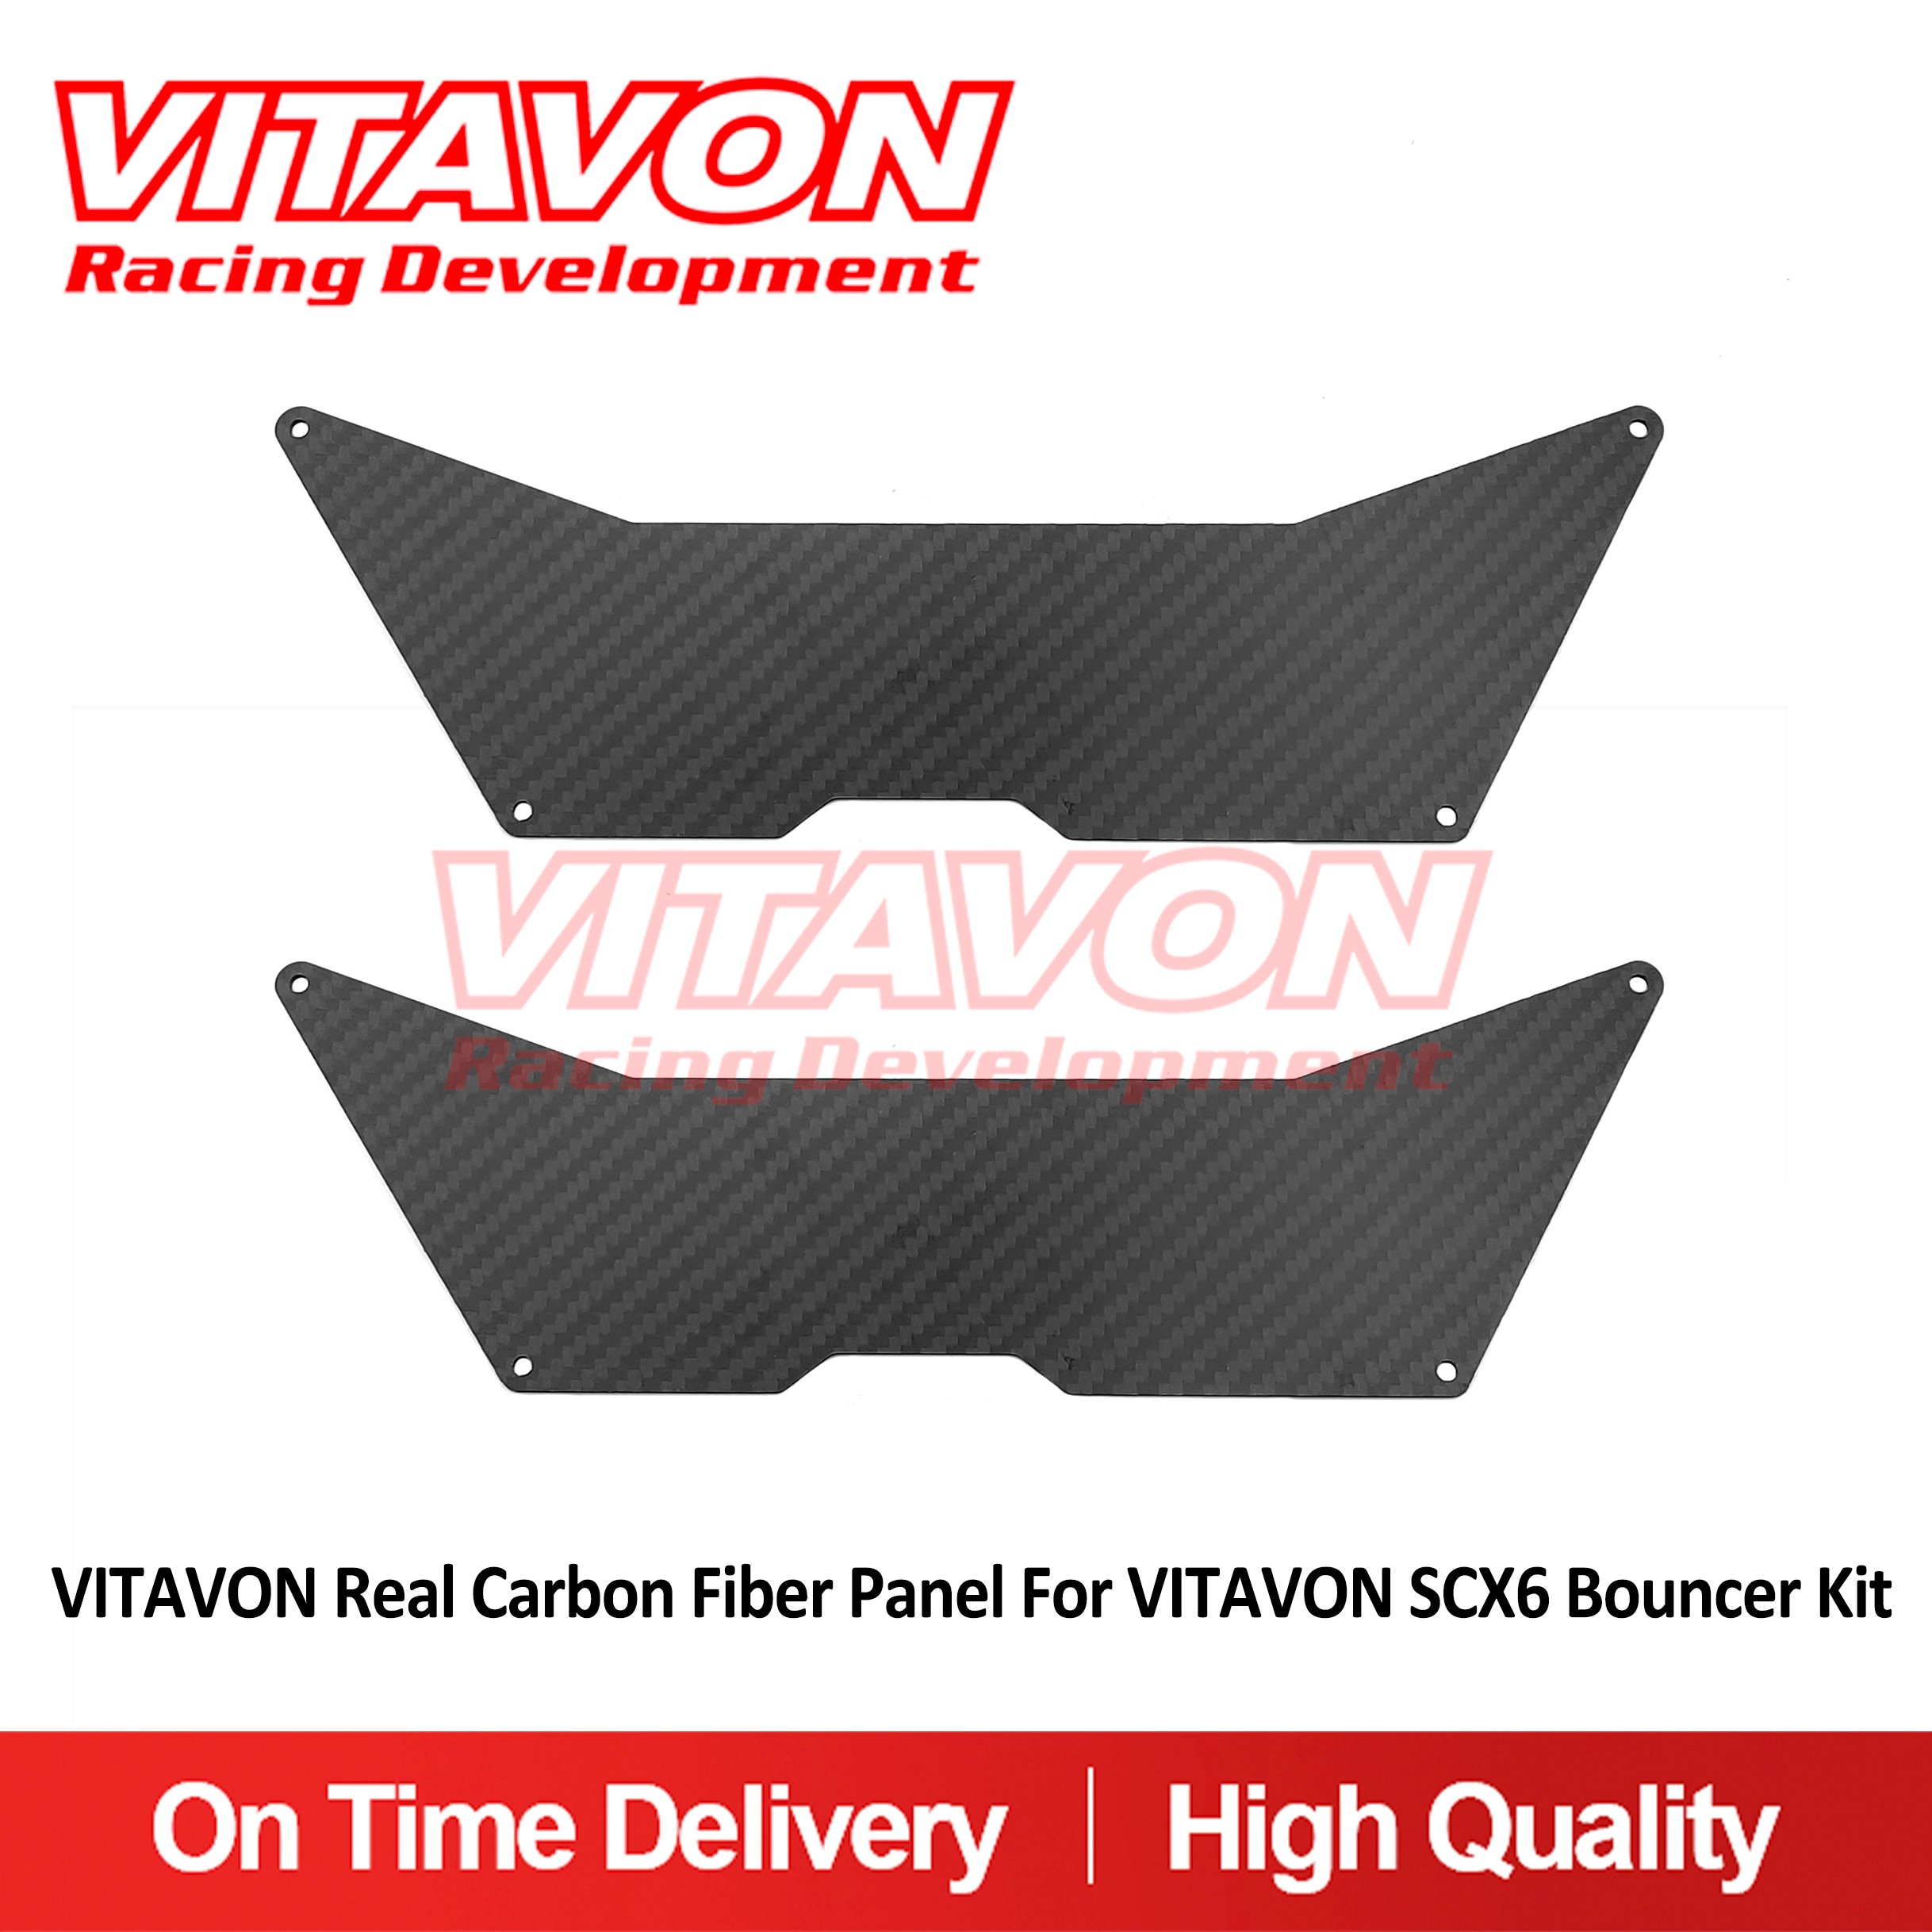 VITAVON Real Carbon Fiber Panel For VITAVON SCX6 Bouncer Kit